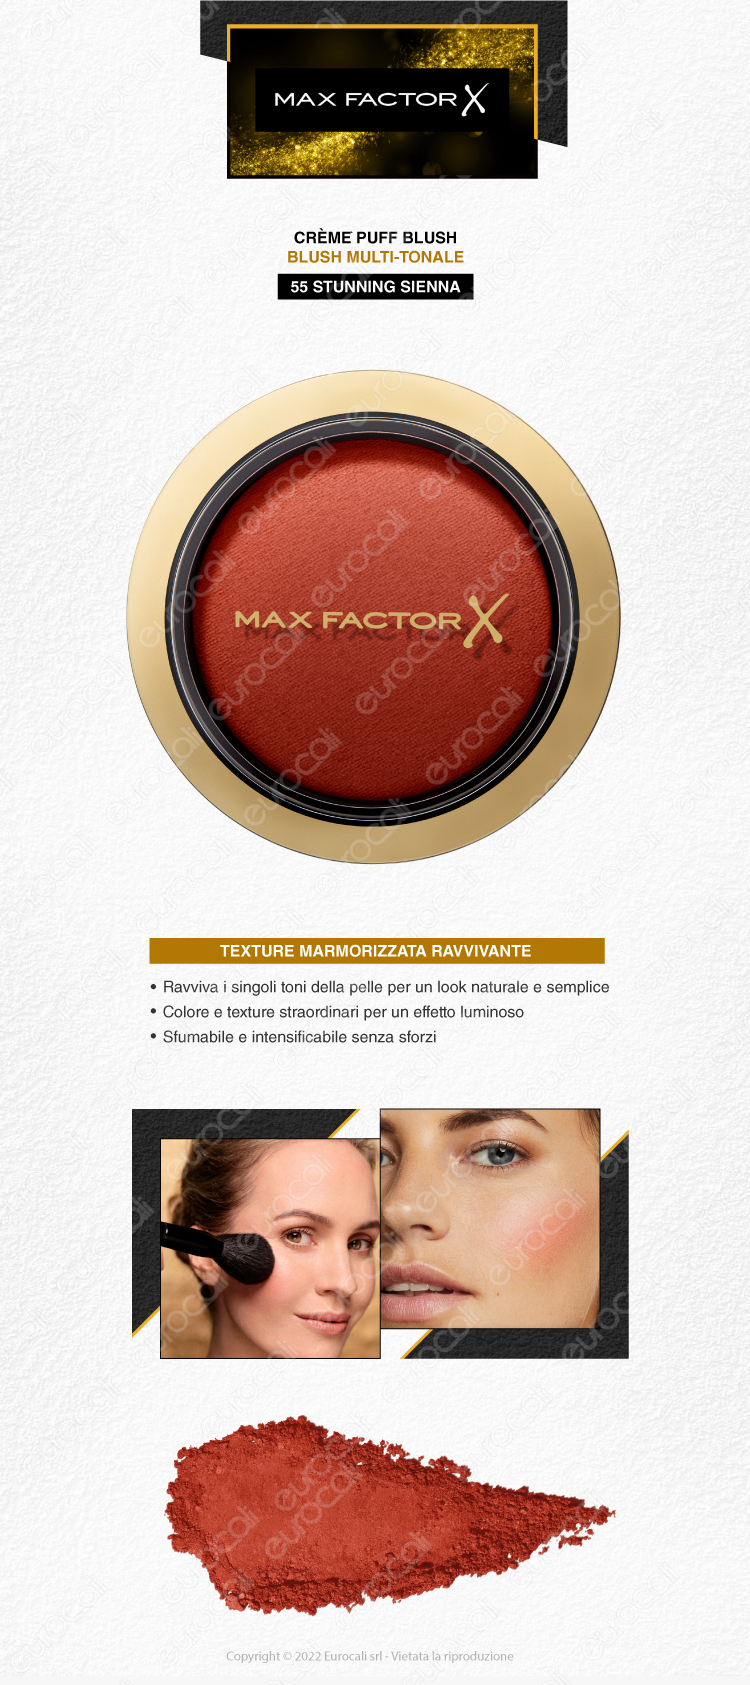 max factor crème puff blush fard modulabile in polvere 55 stunning siena